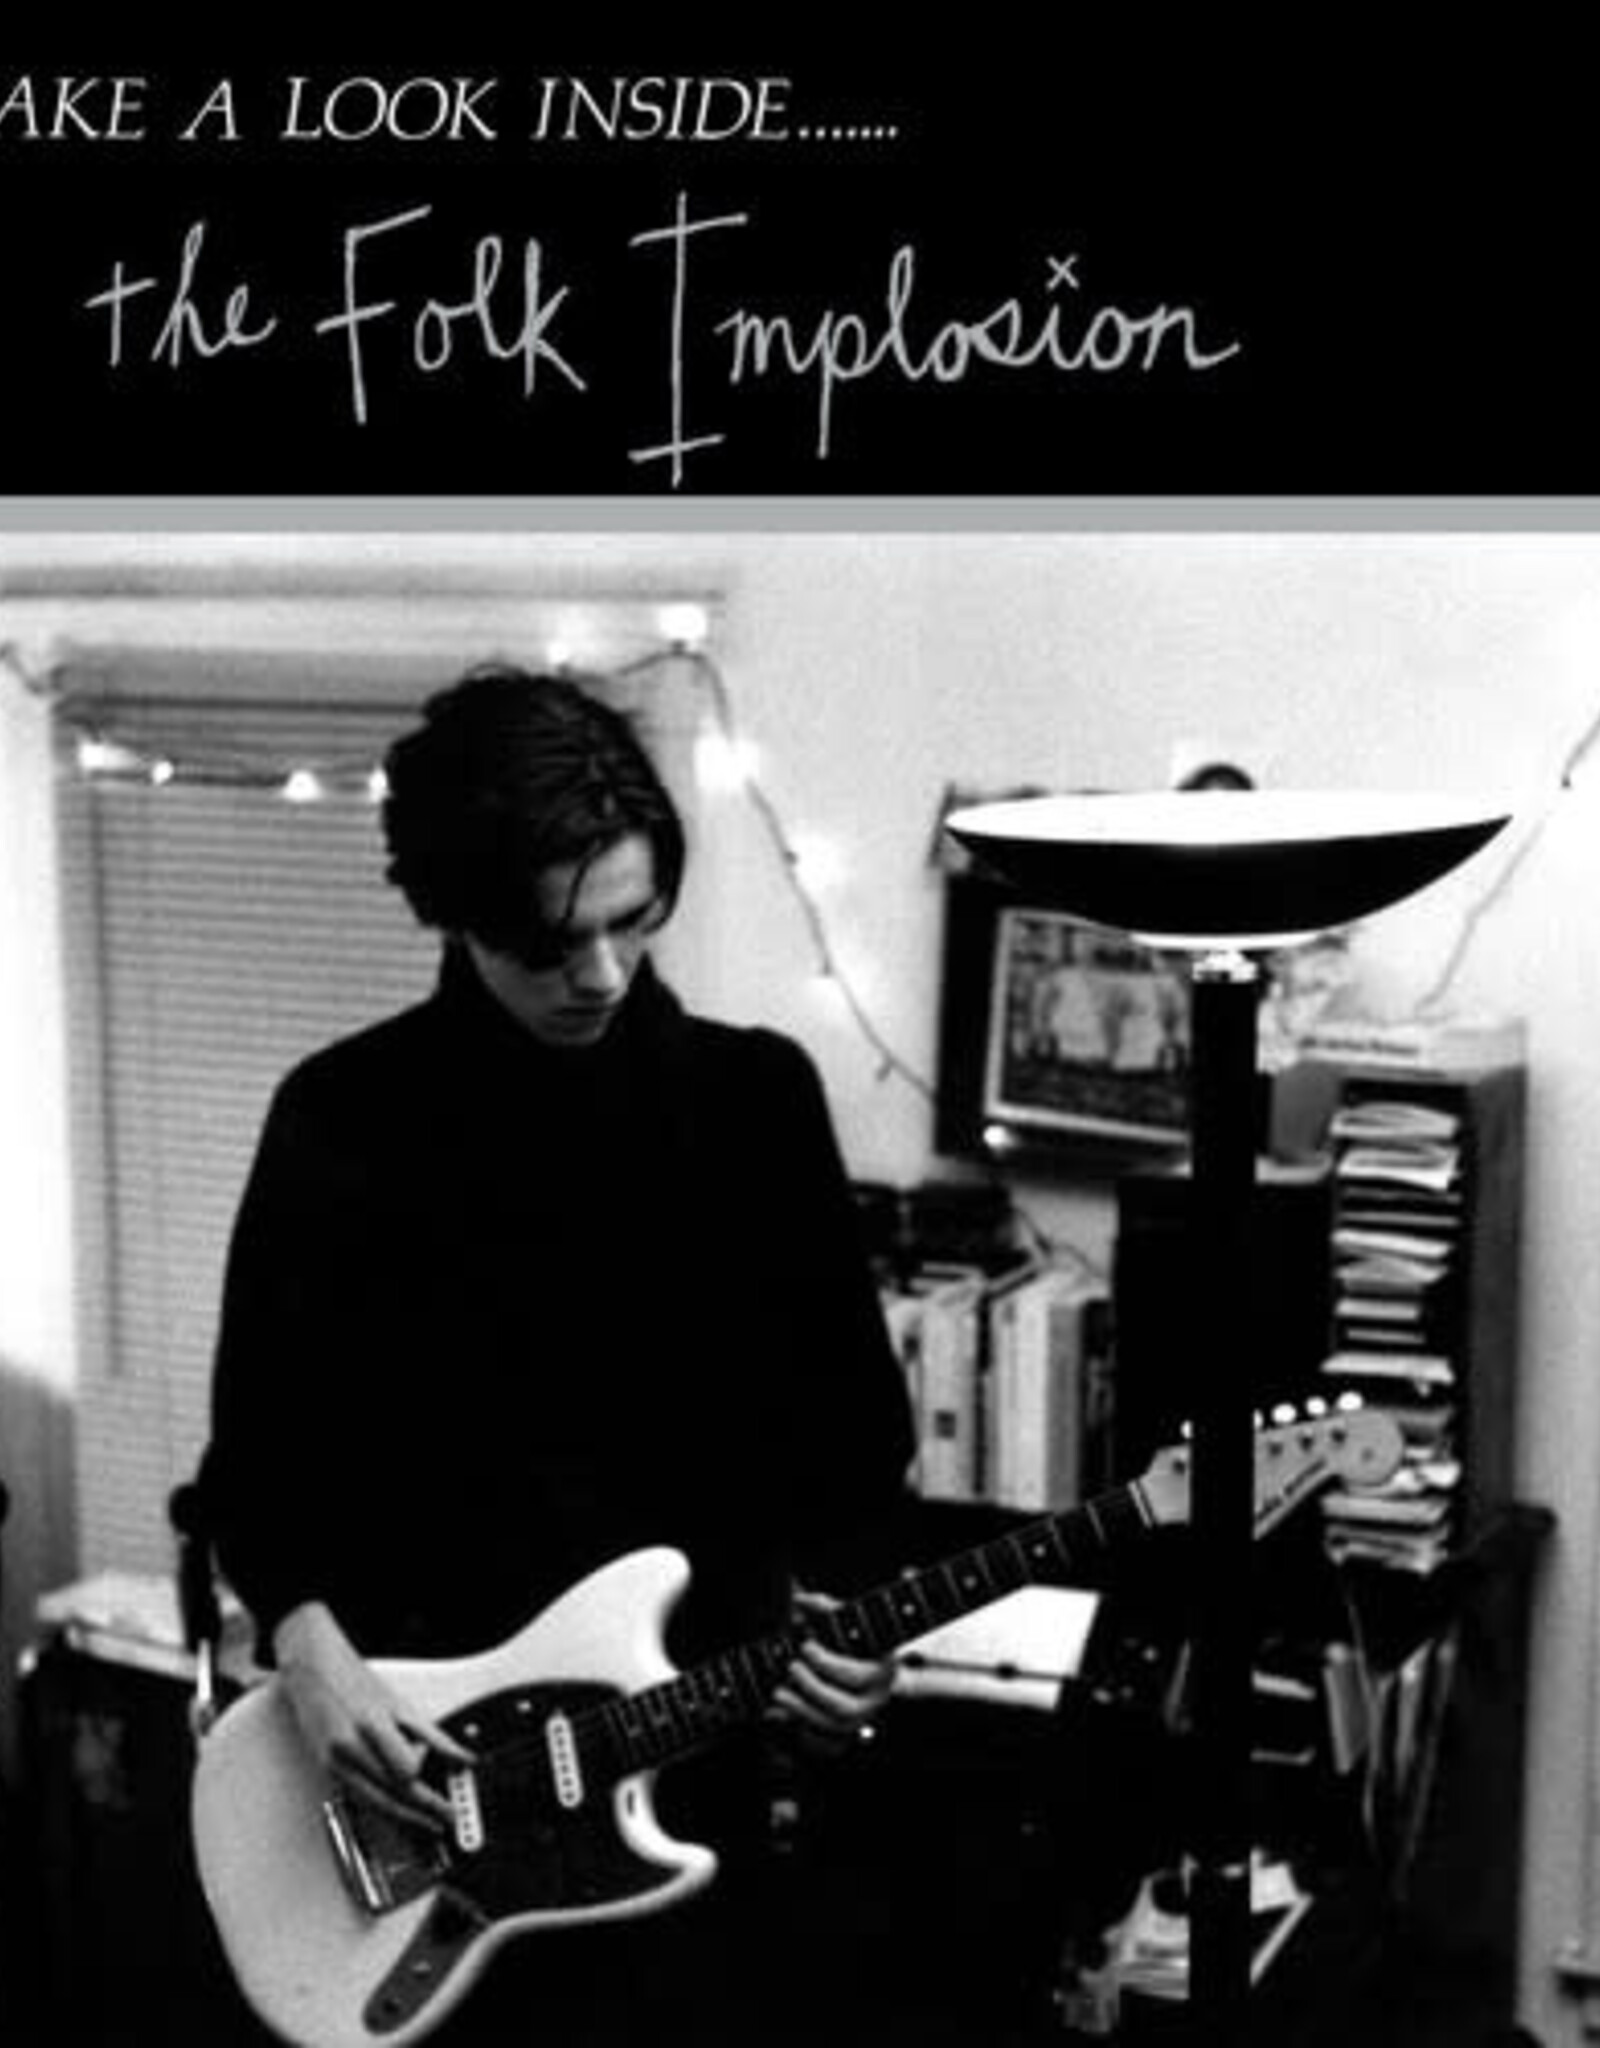 Folk Implosion - Take a Look Inside (Clear Vinyl LP)